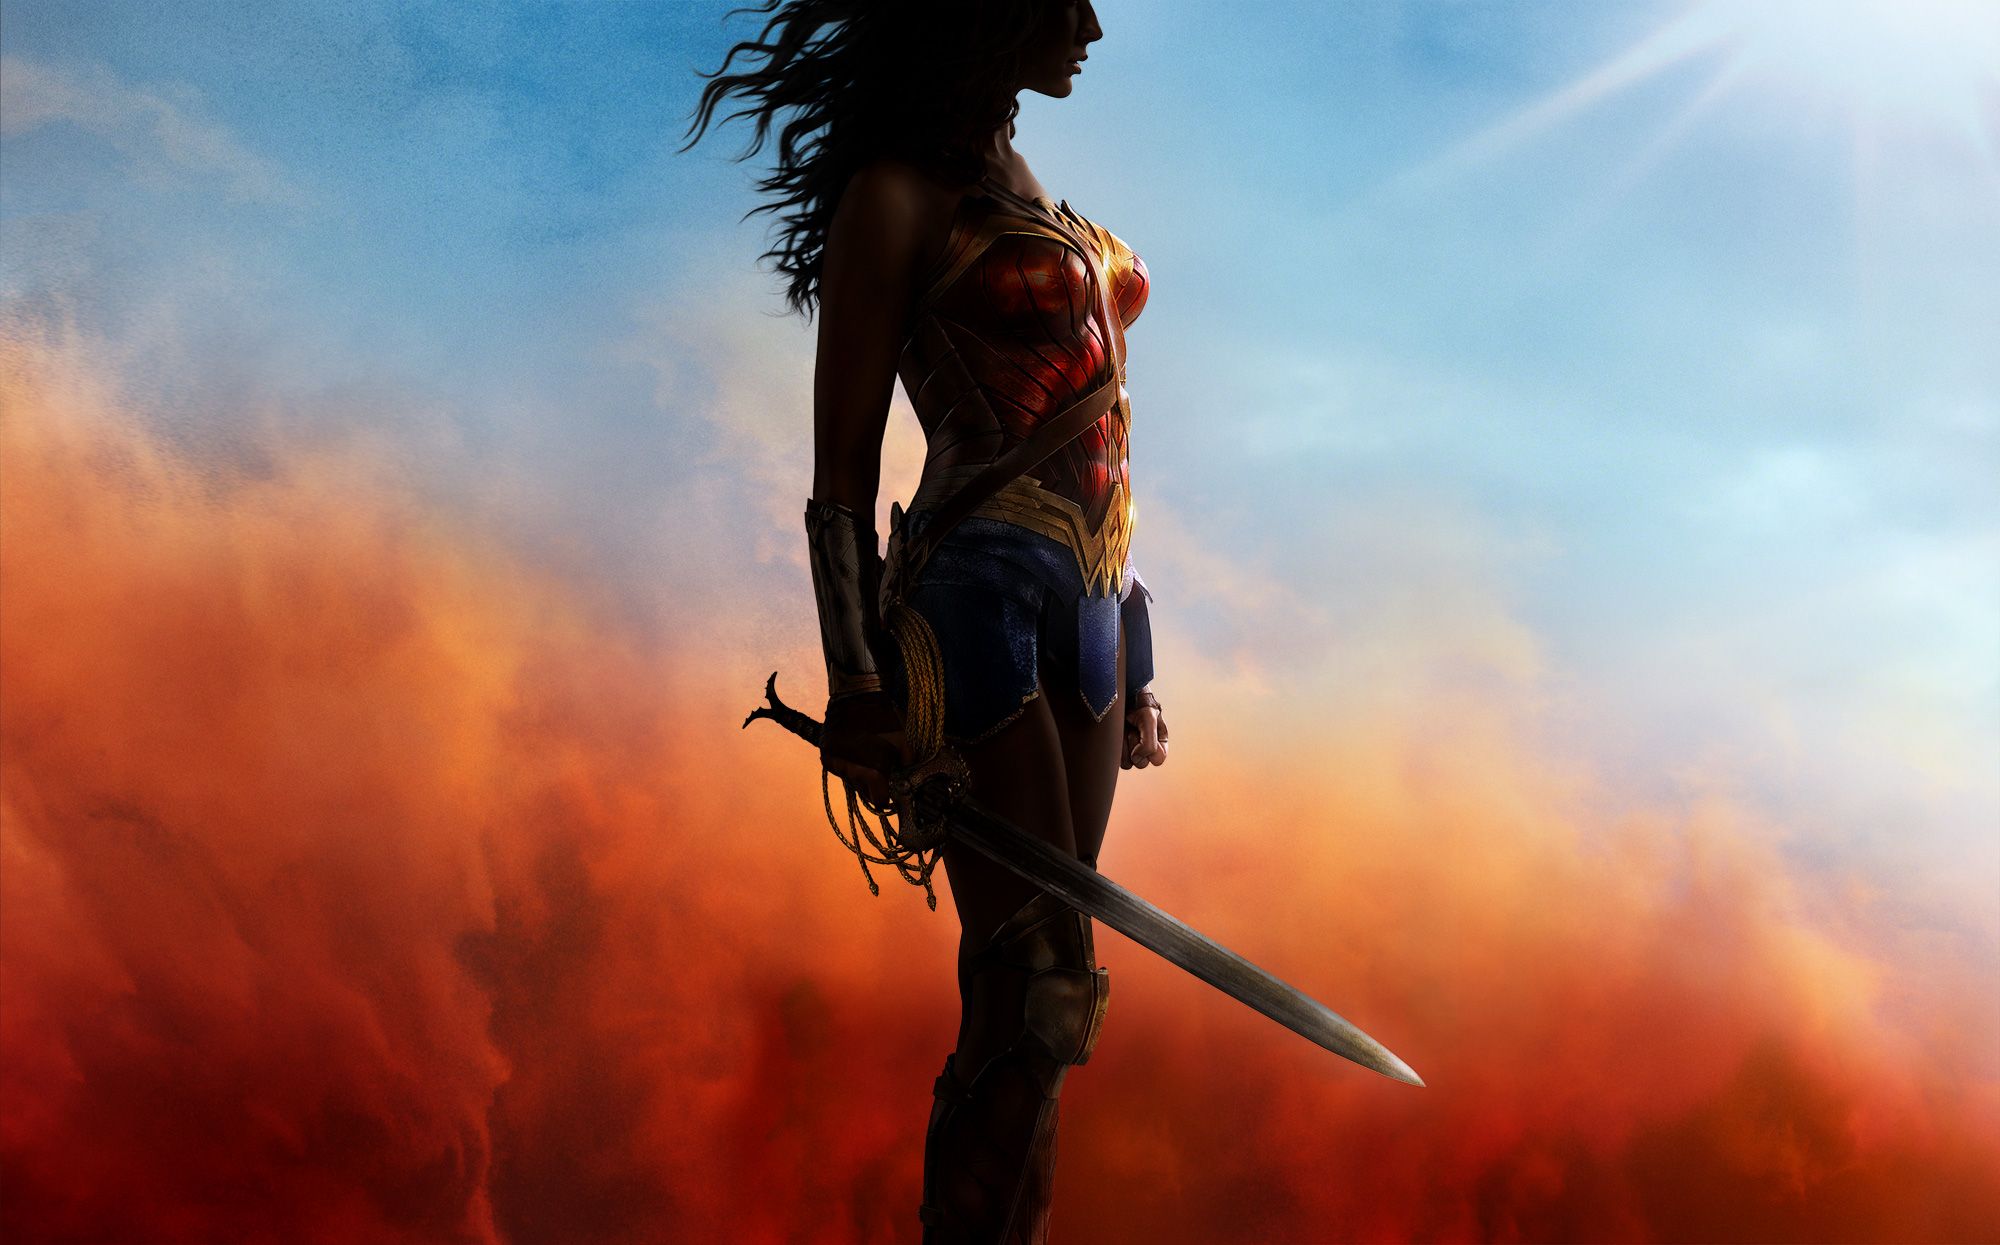 New Wonder Woman Movie Wallpapers